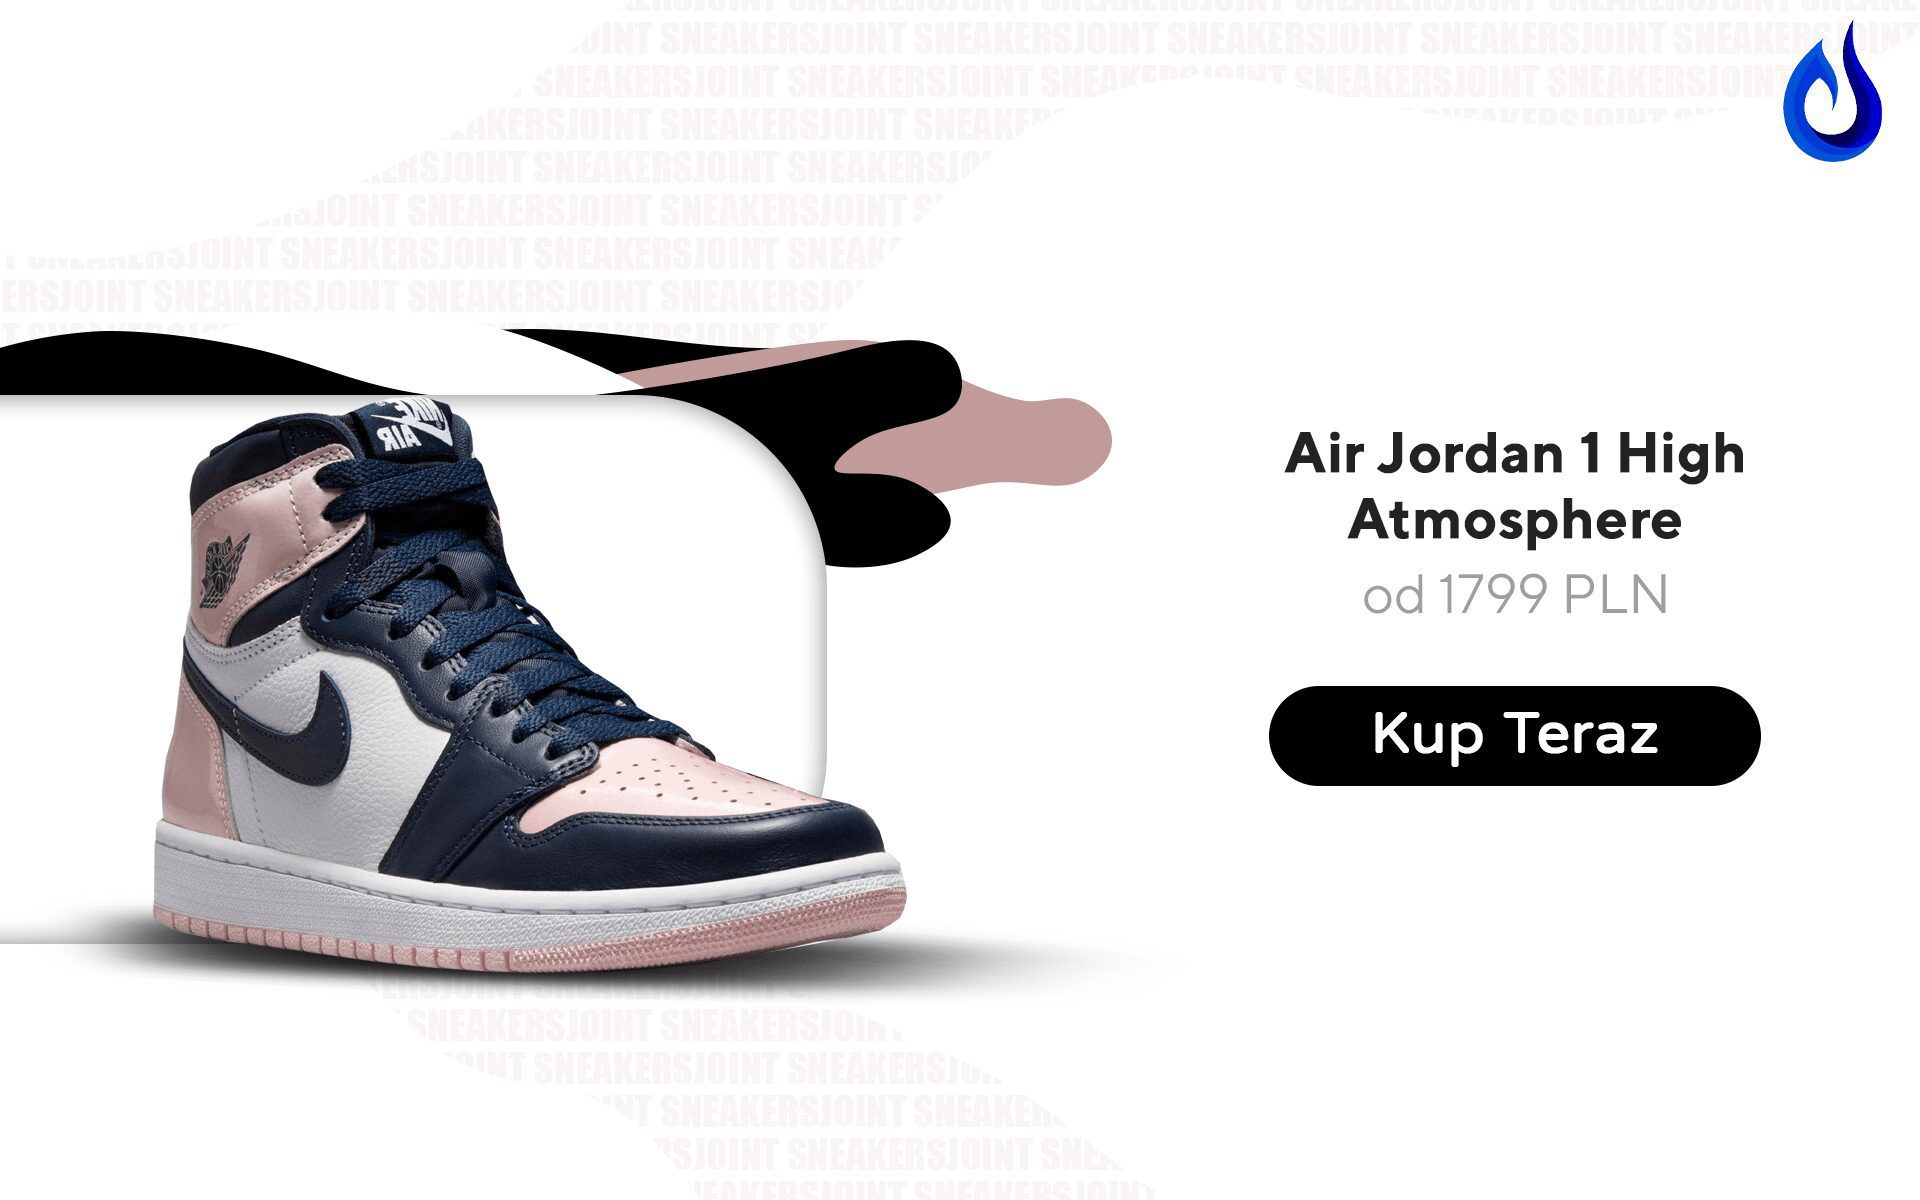 Air Jordan 1 Atmosphere - 7 Propozycji sneakersów na wiosnę